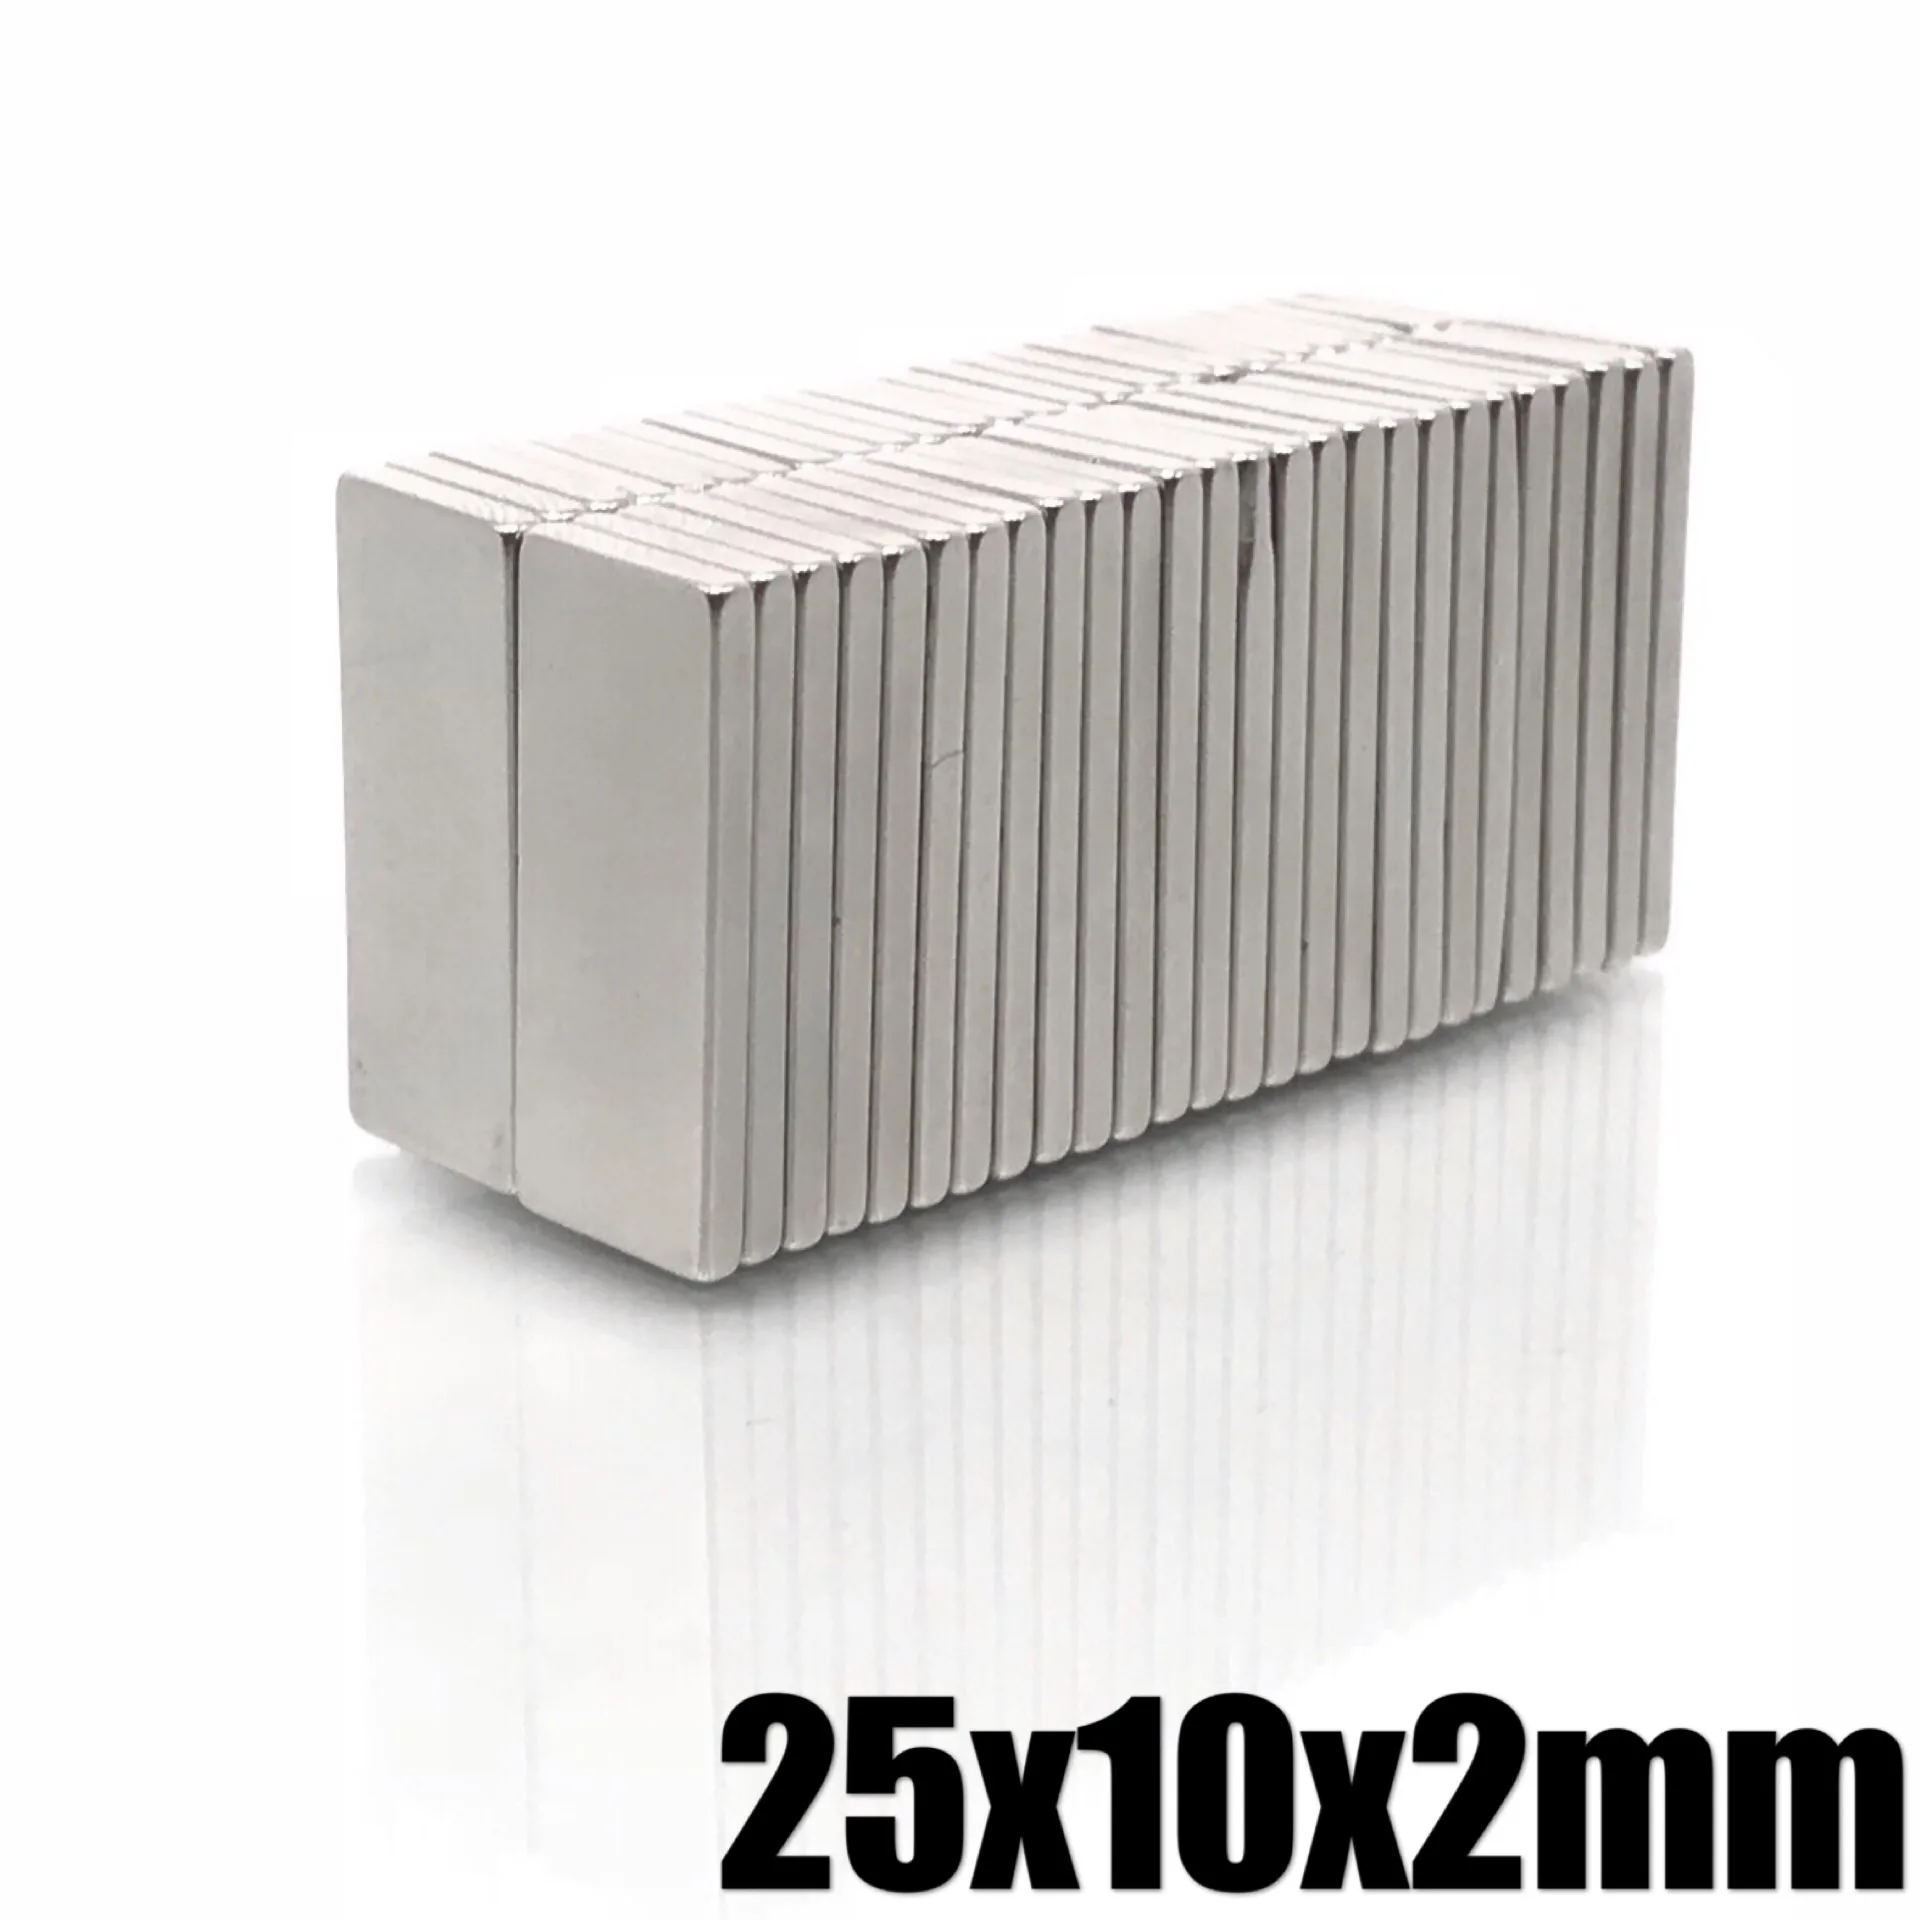 5 Strong N52 Grade Magnets 25x10x3 mm Neodymium block magnet 25mm x 10mm x 3mm 